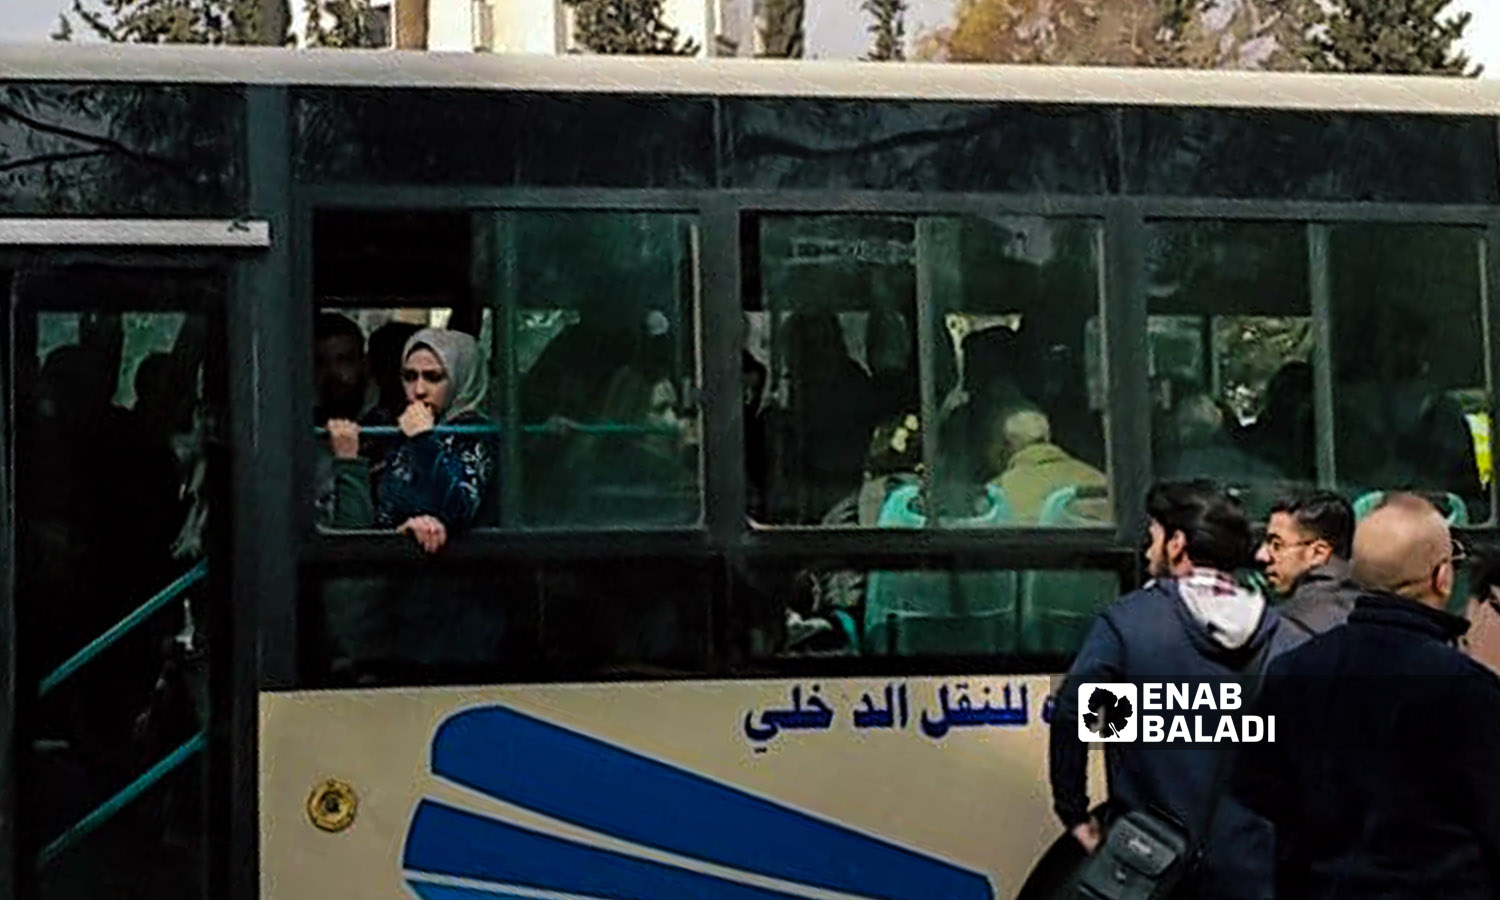 Passengers riding a city bus in Damascus -  20 February 2022 (Hassan Hassan / Enab Baladi)